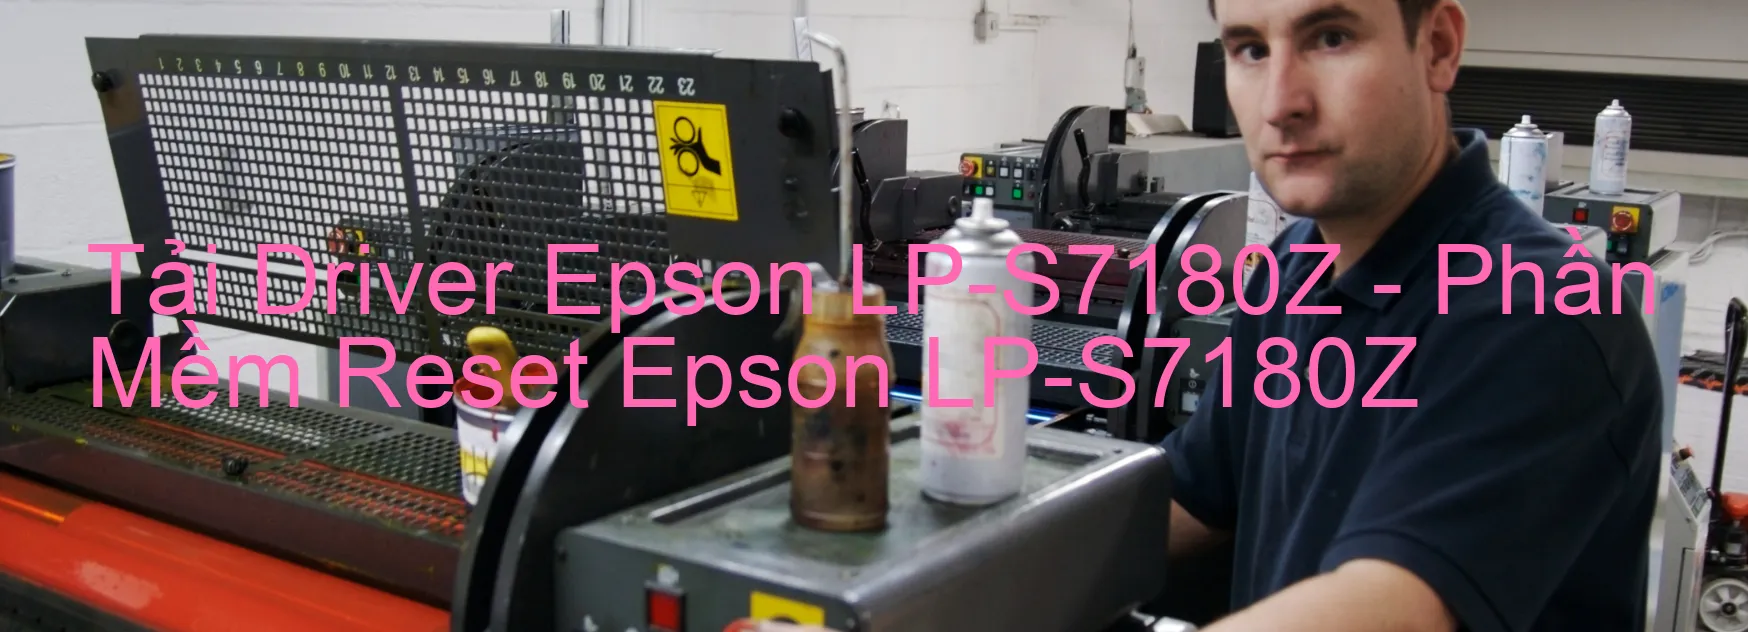 Driver Epson LP-S7180Z, Phần Mềm Reset Epson LP-S7180Z